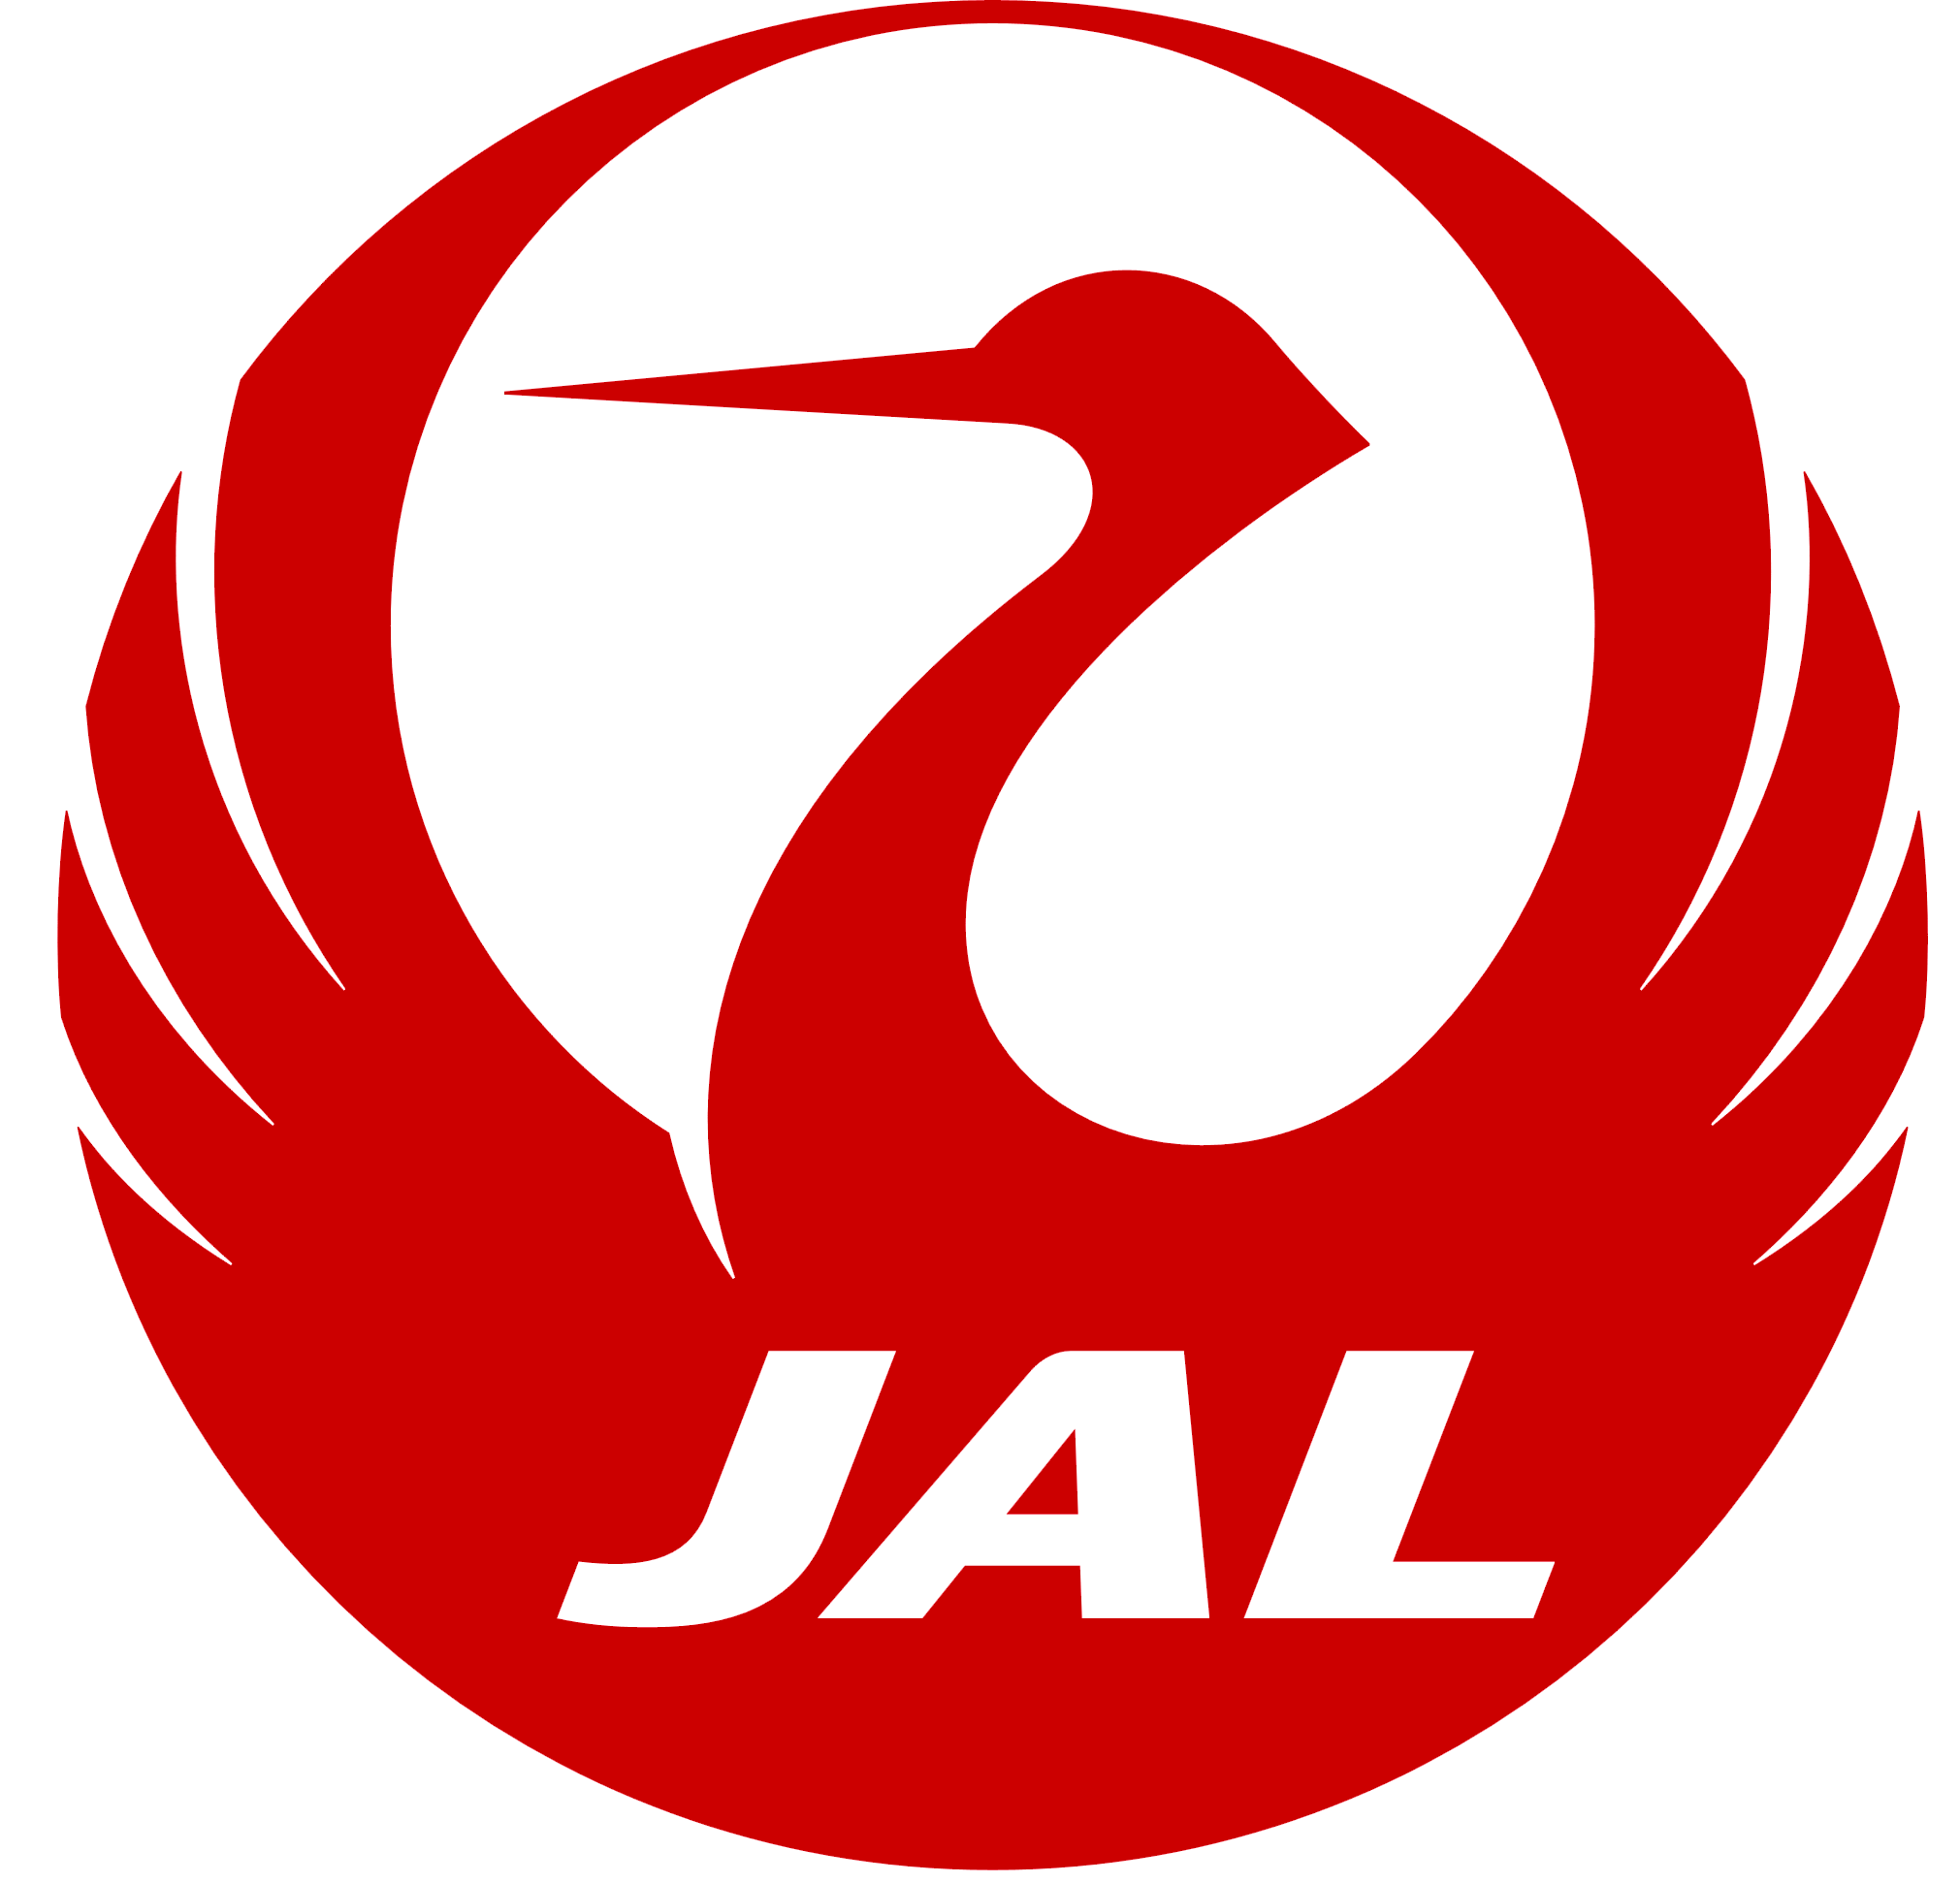 Japan Airlines – Logos Download
